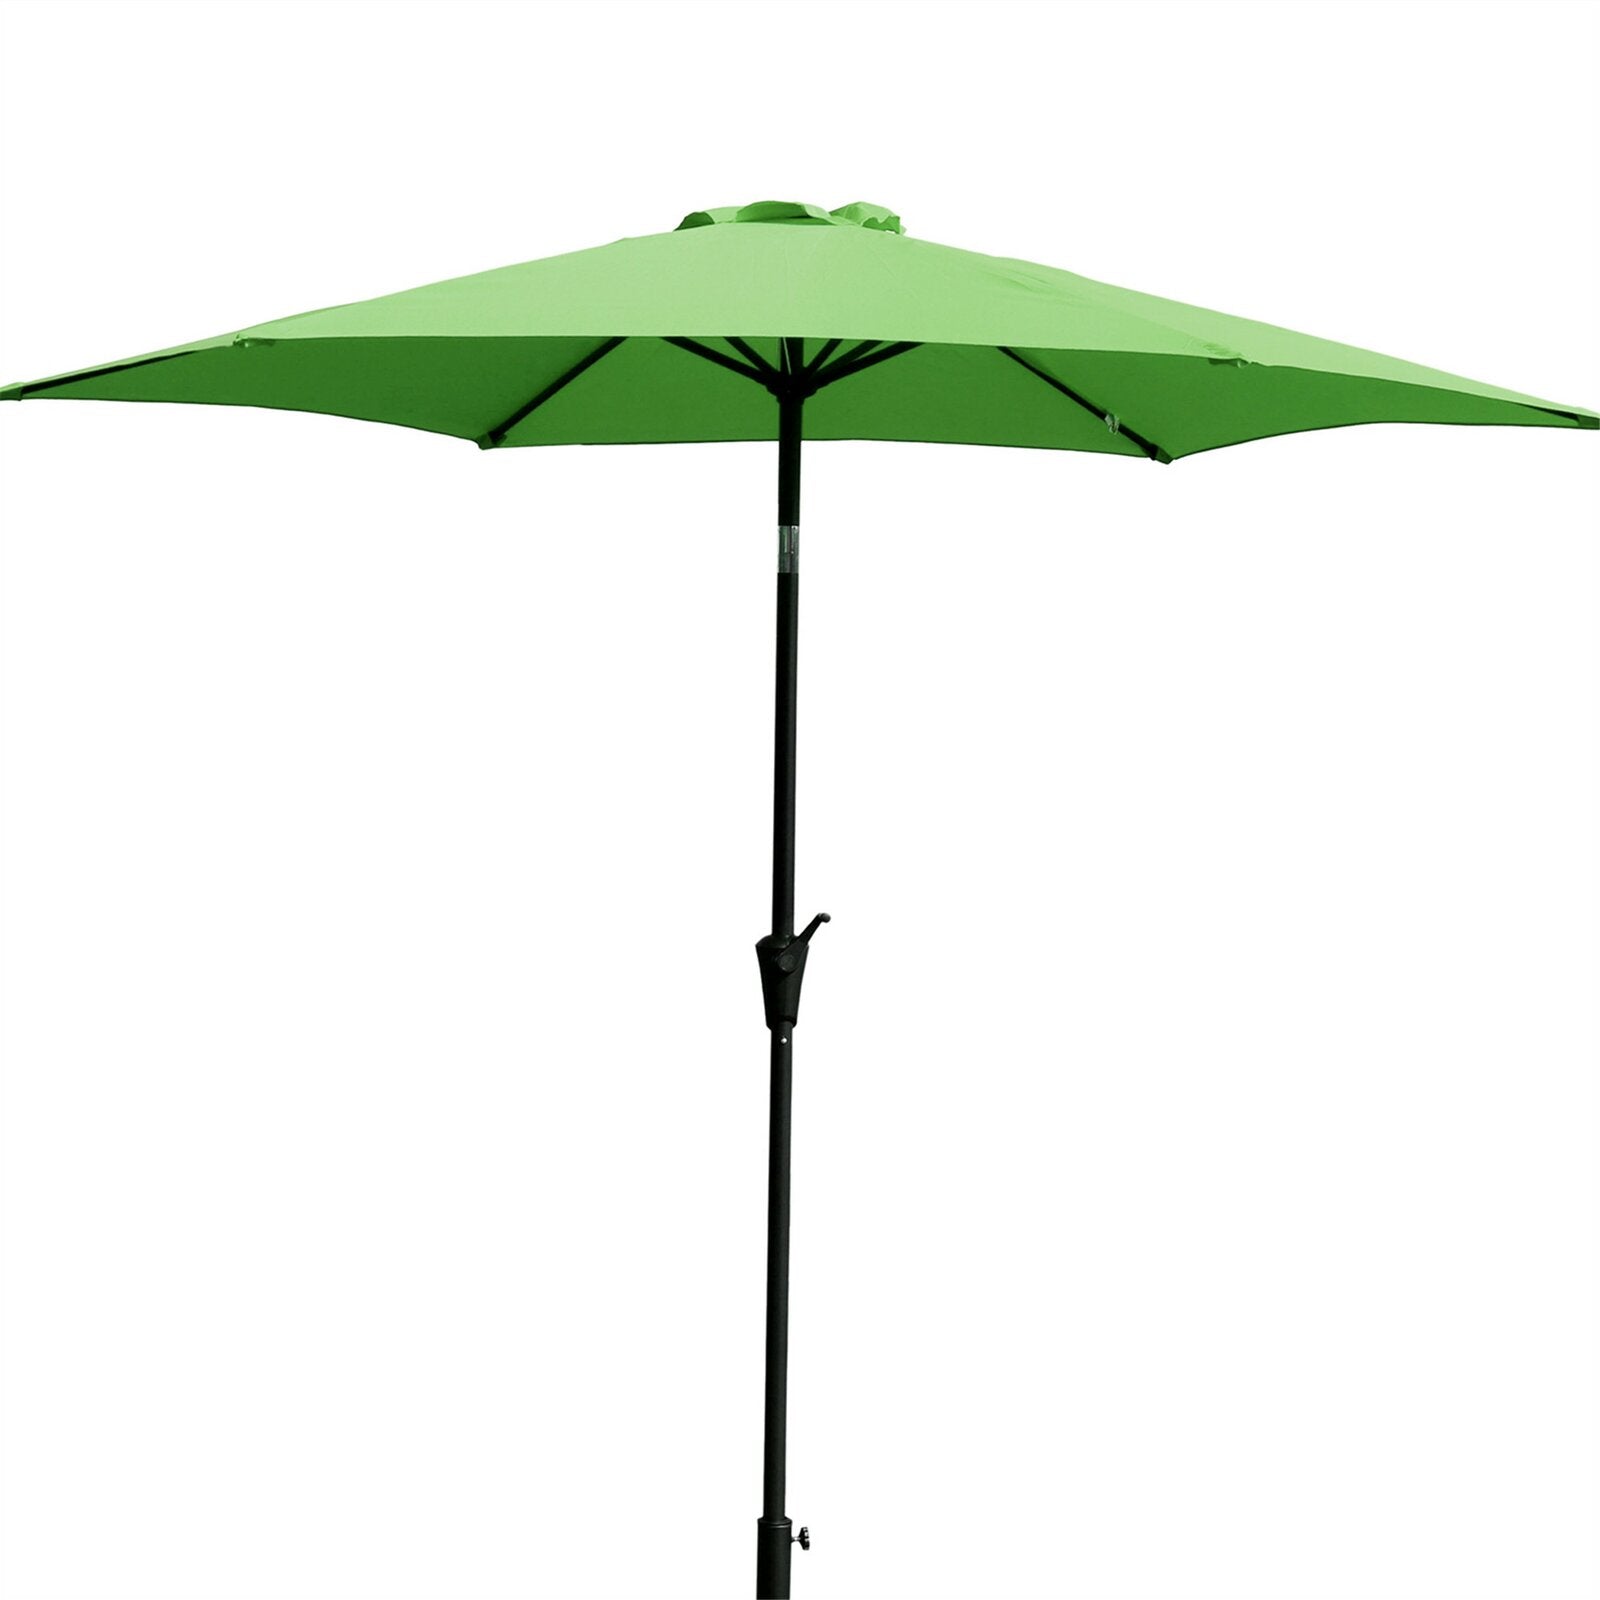 BAOERRS 9 ft Patio Umbrella Outdoor Market Umbrellas Table Umbrellas Best for Deck, Balcony, Garden, Lawn & Pool with Carry Bag, Green